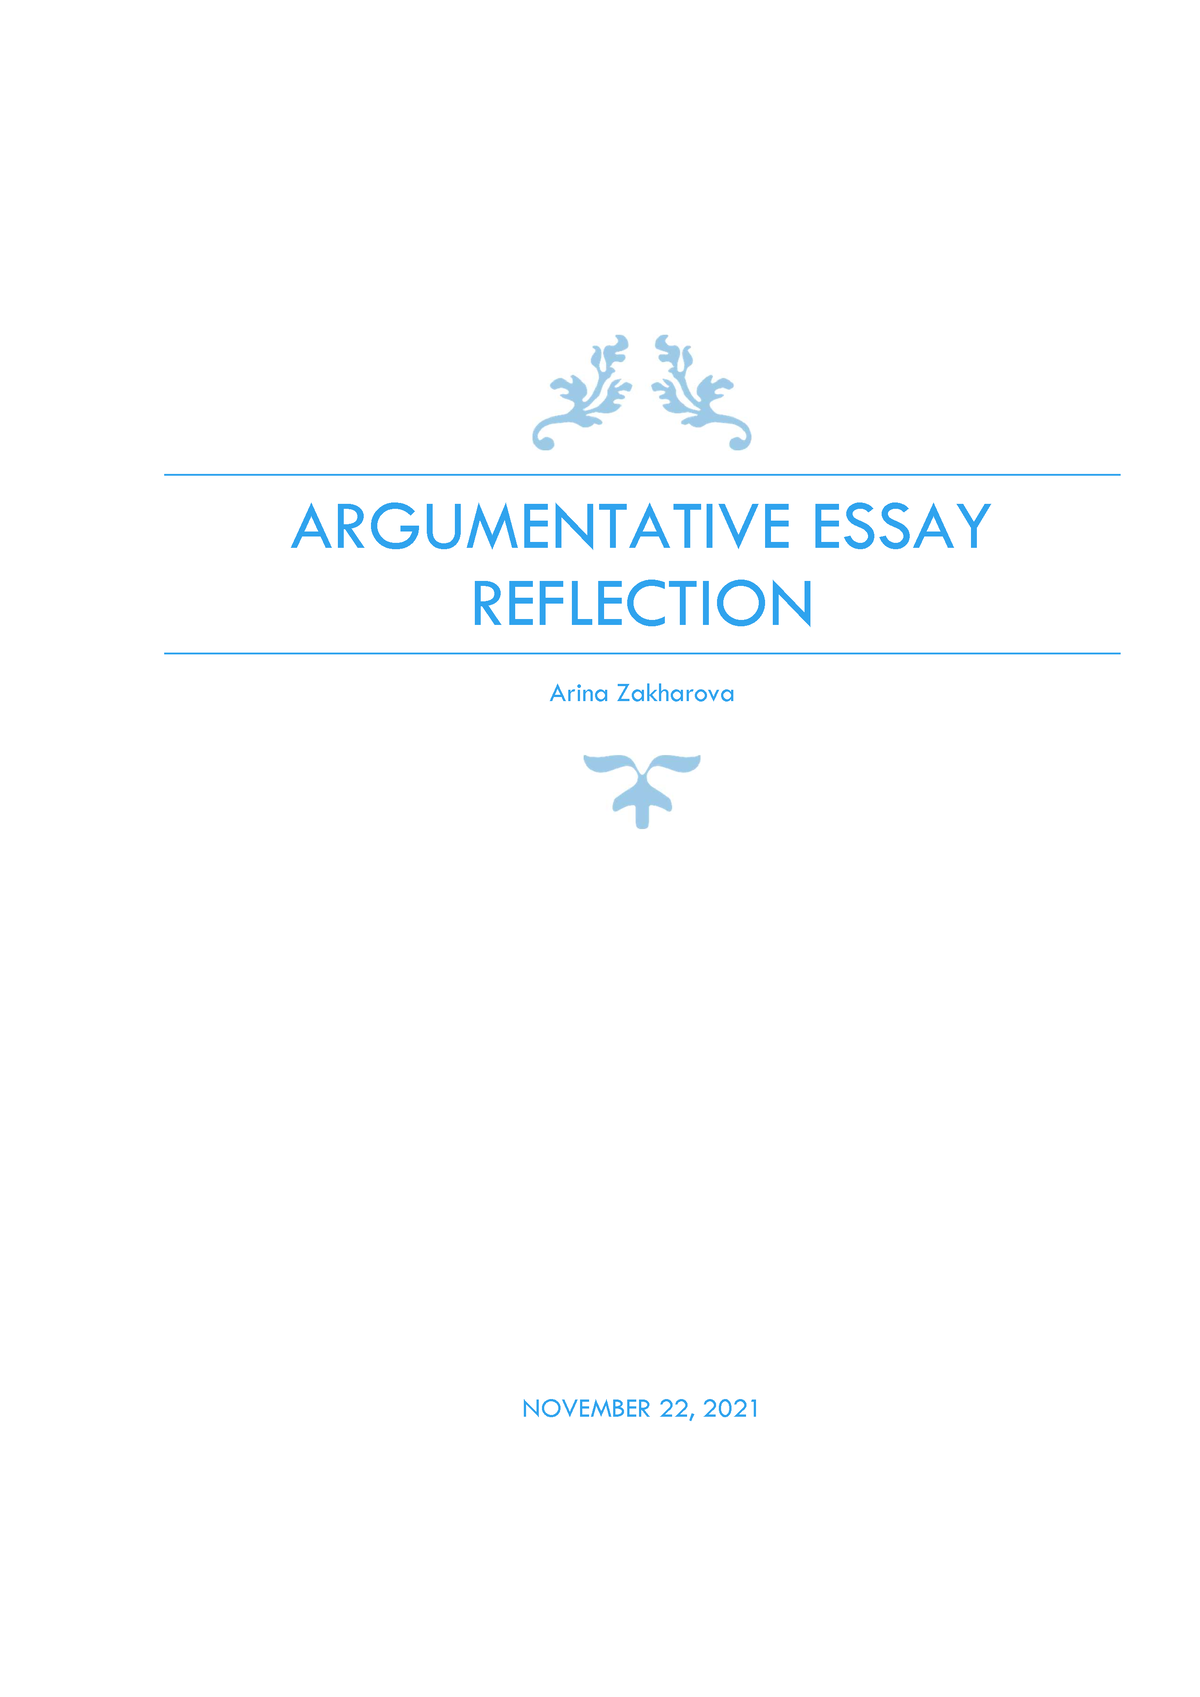 reflection on argumentative essay